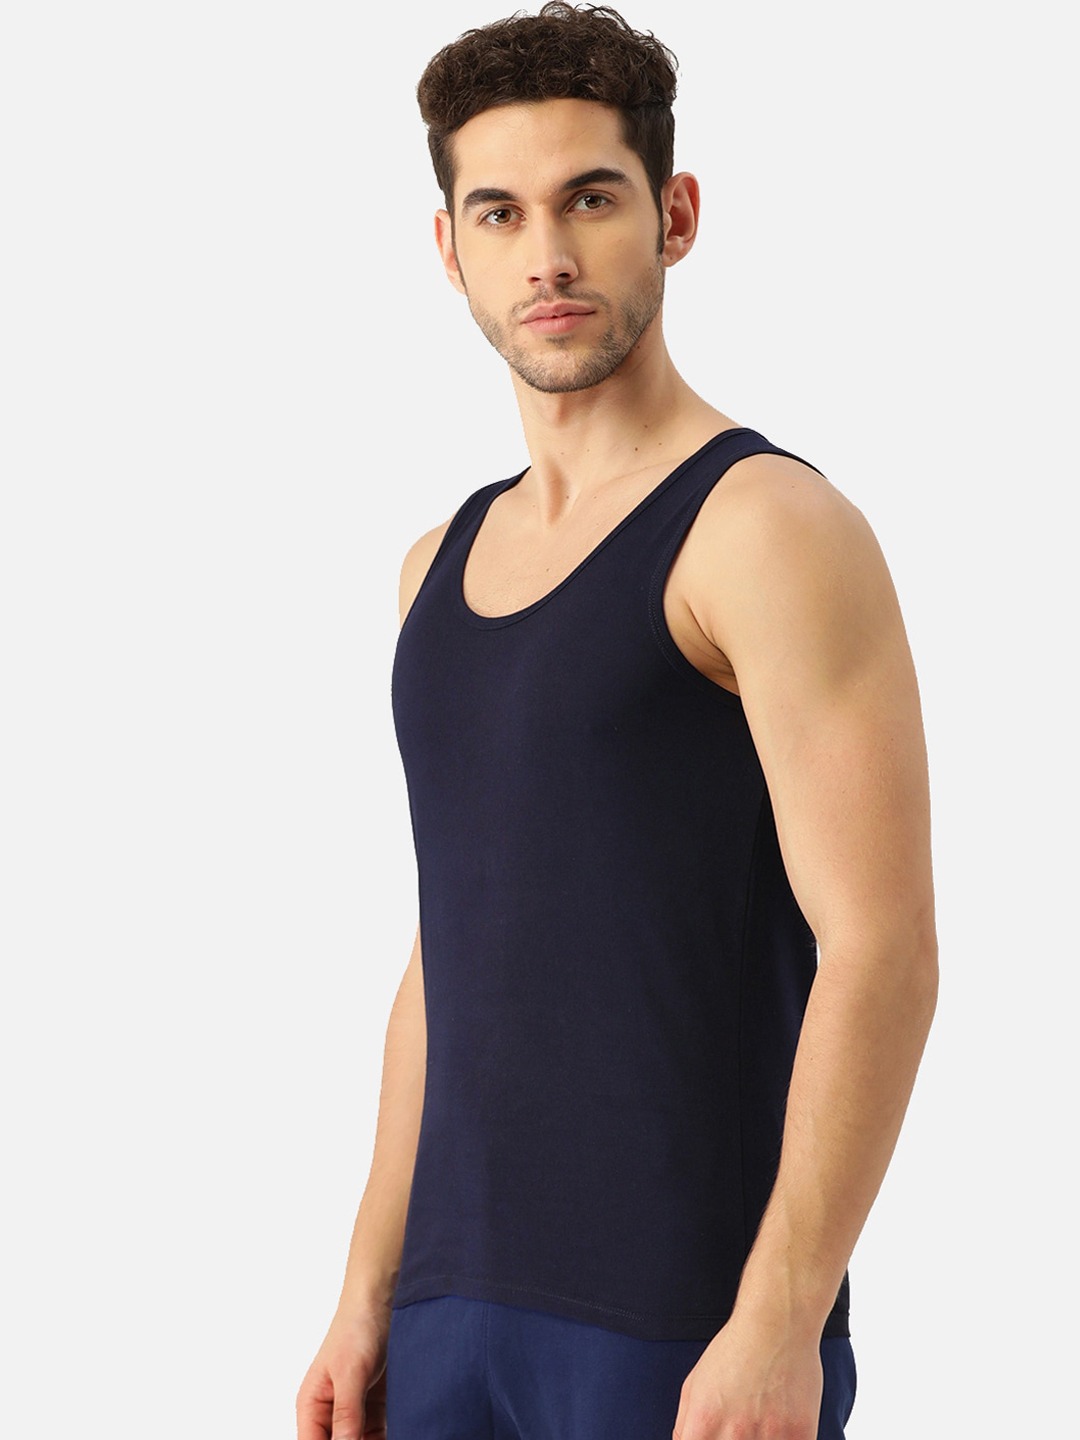 Clothing Innerwear Vests | ROMEO ROSSI Pack of 3 Navy Blue Round Neck Innerwear Vests - XG15242